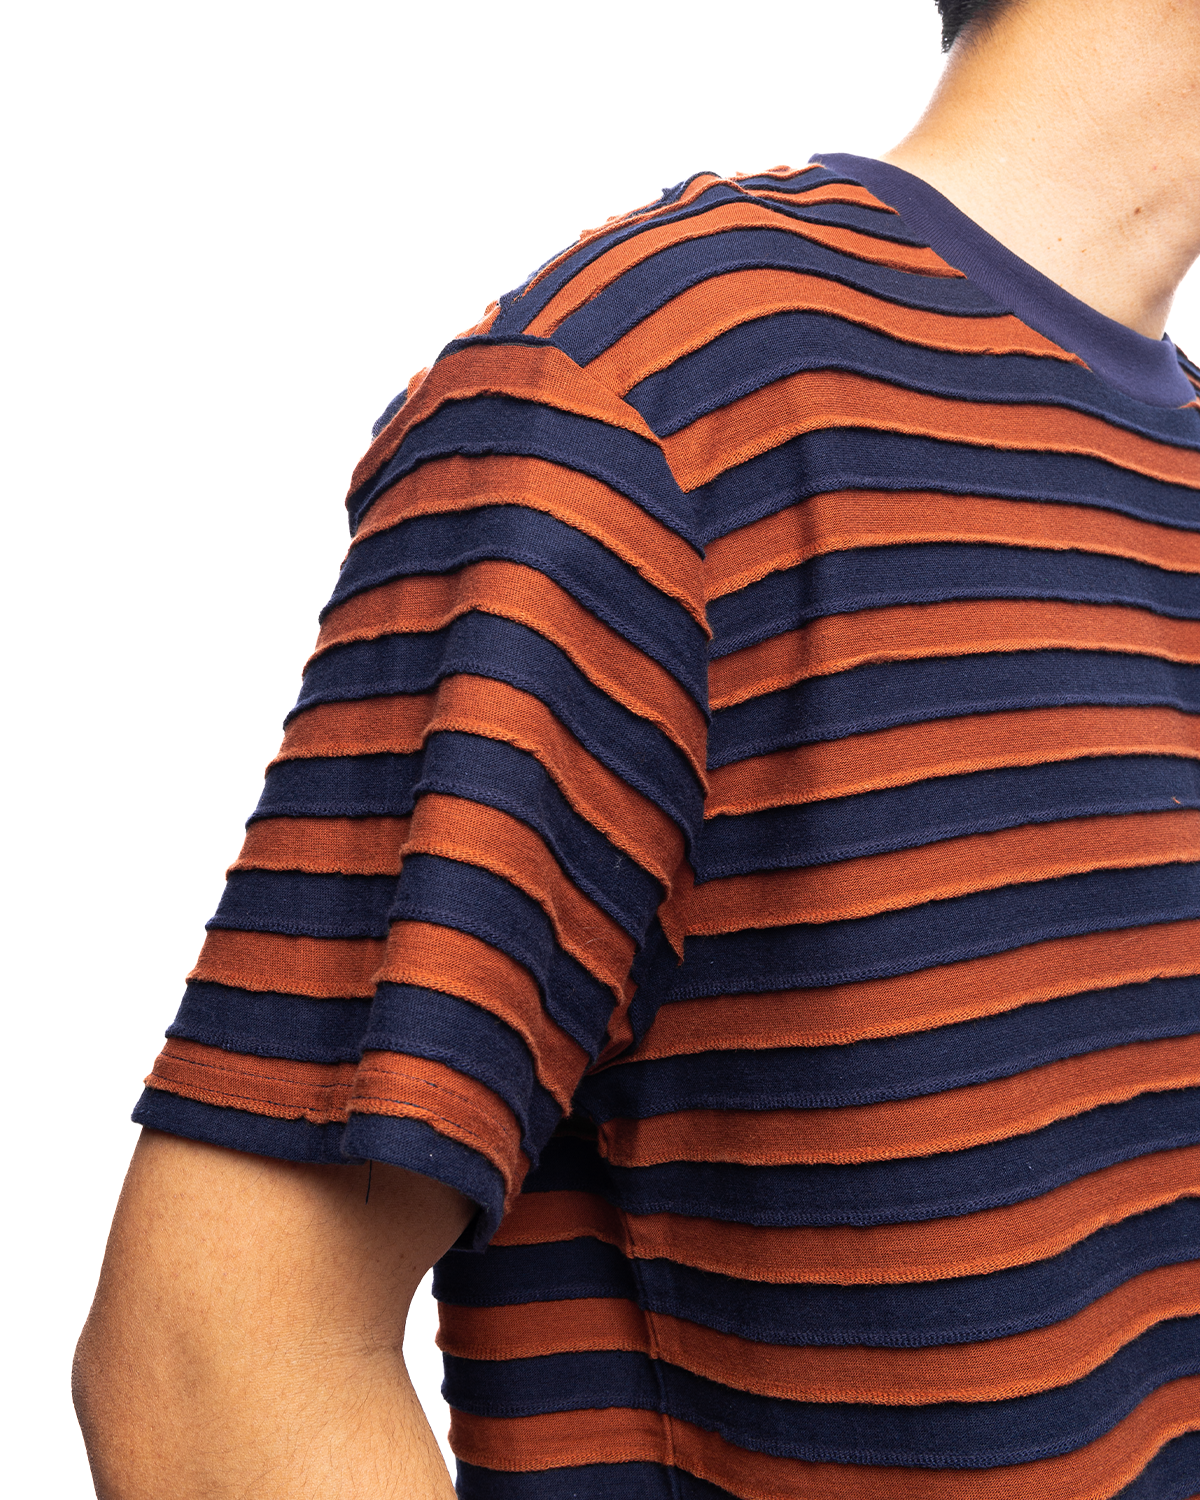 Denny Blaine Striped T-shirt Navy/Light Brown